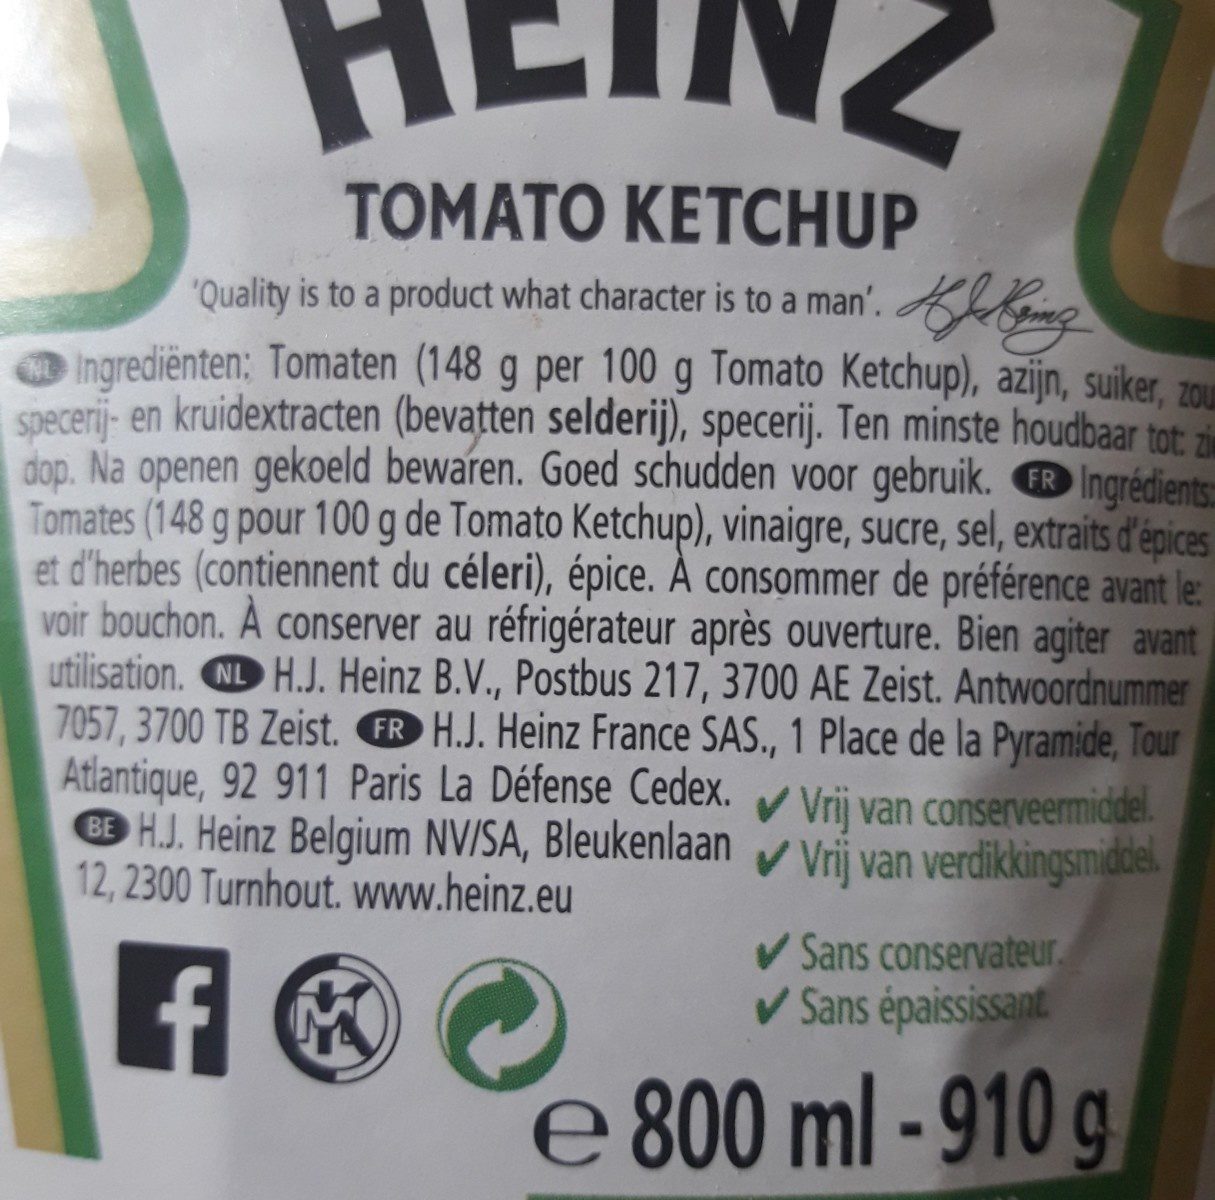 Tomato Ketchup 910 g flacon - Ingrédients